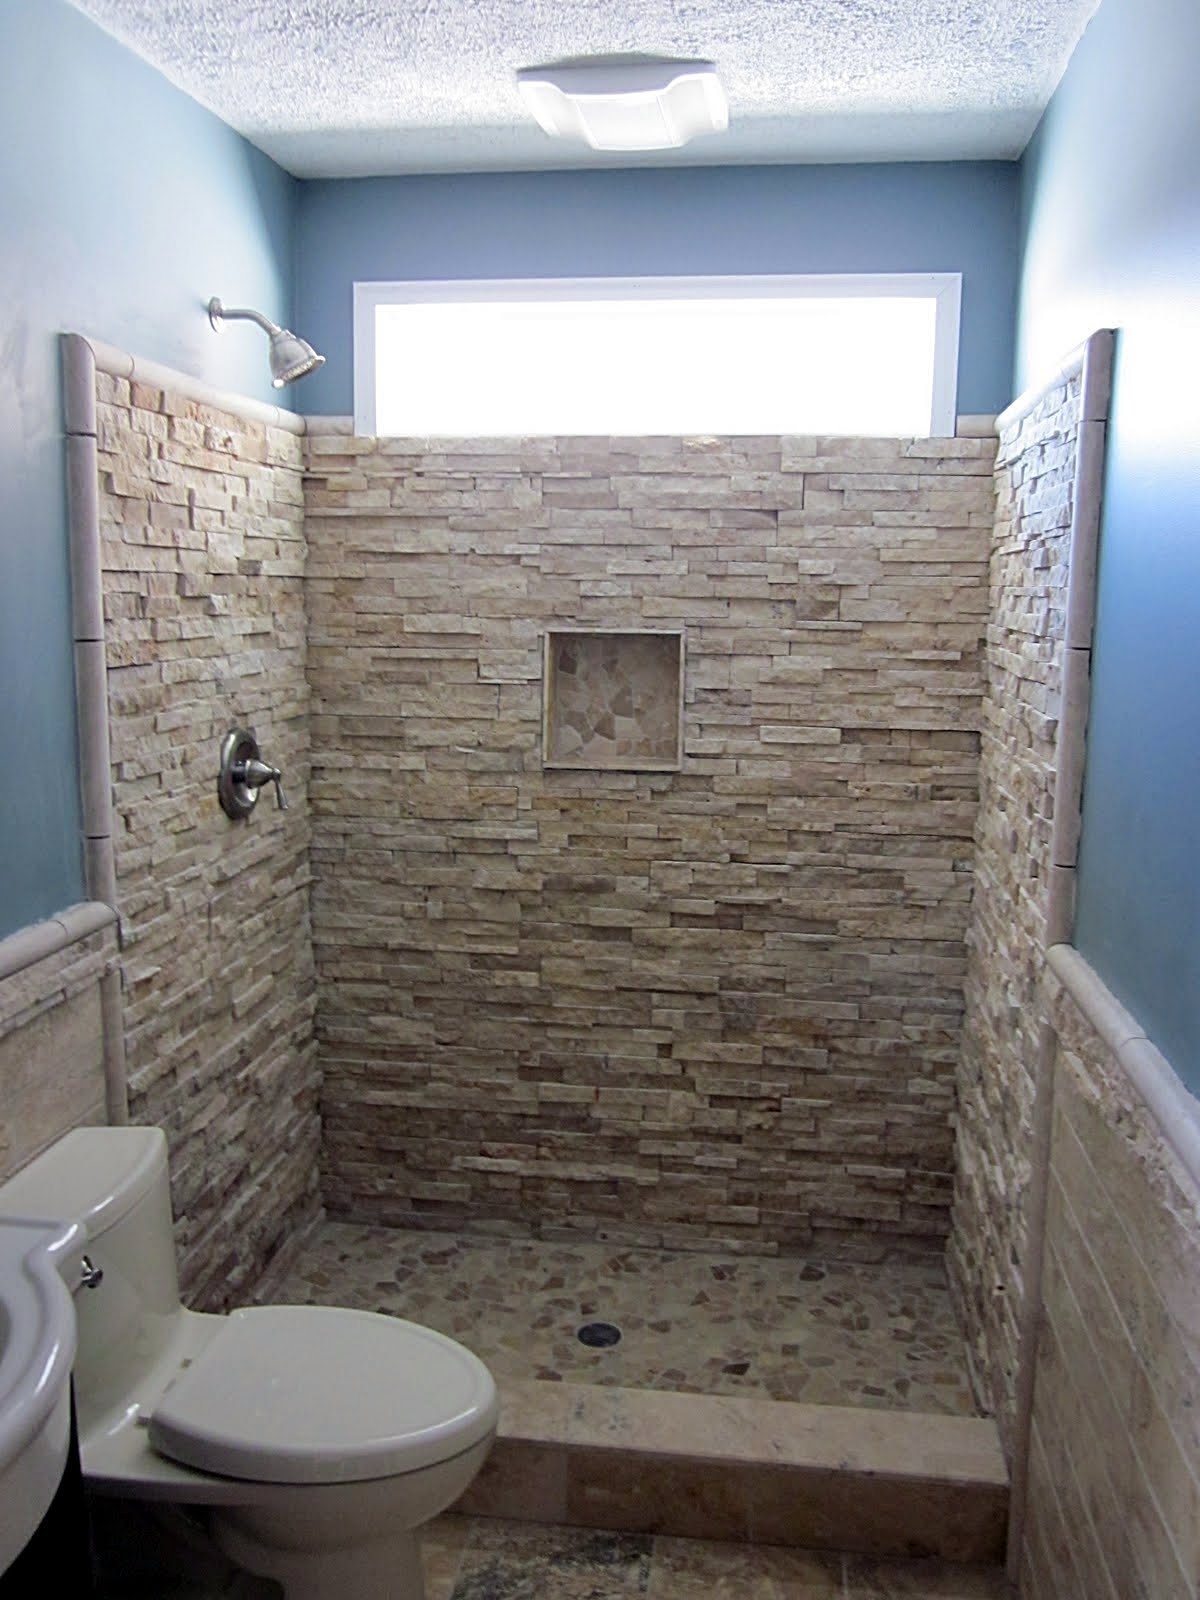 10 Trendy Tub To Shower Conversion Ideas small bath tub shower trends popular 2014 youtube 1 2022